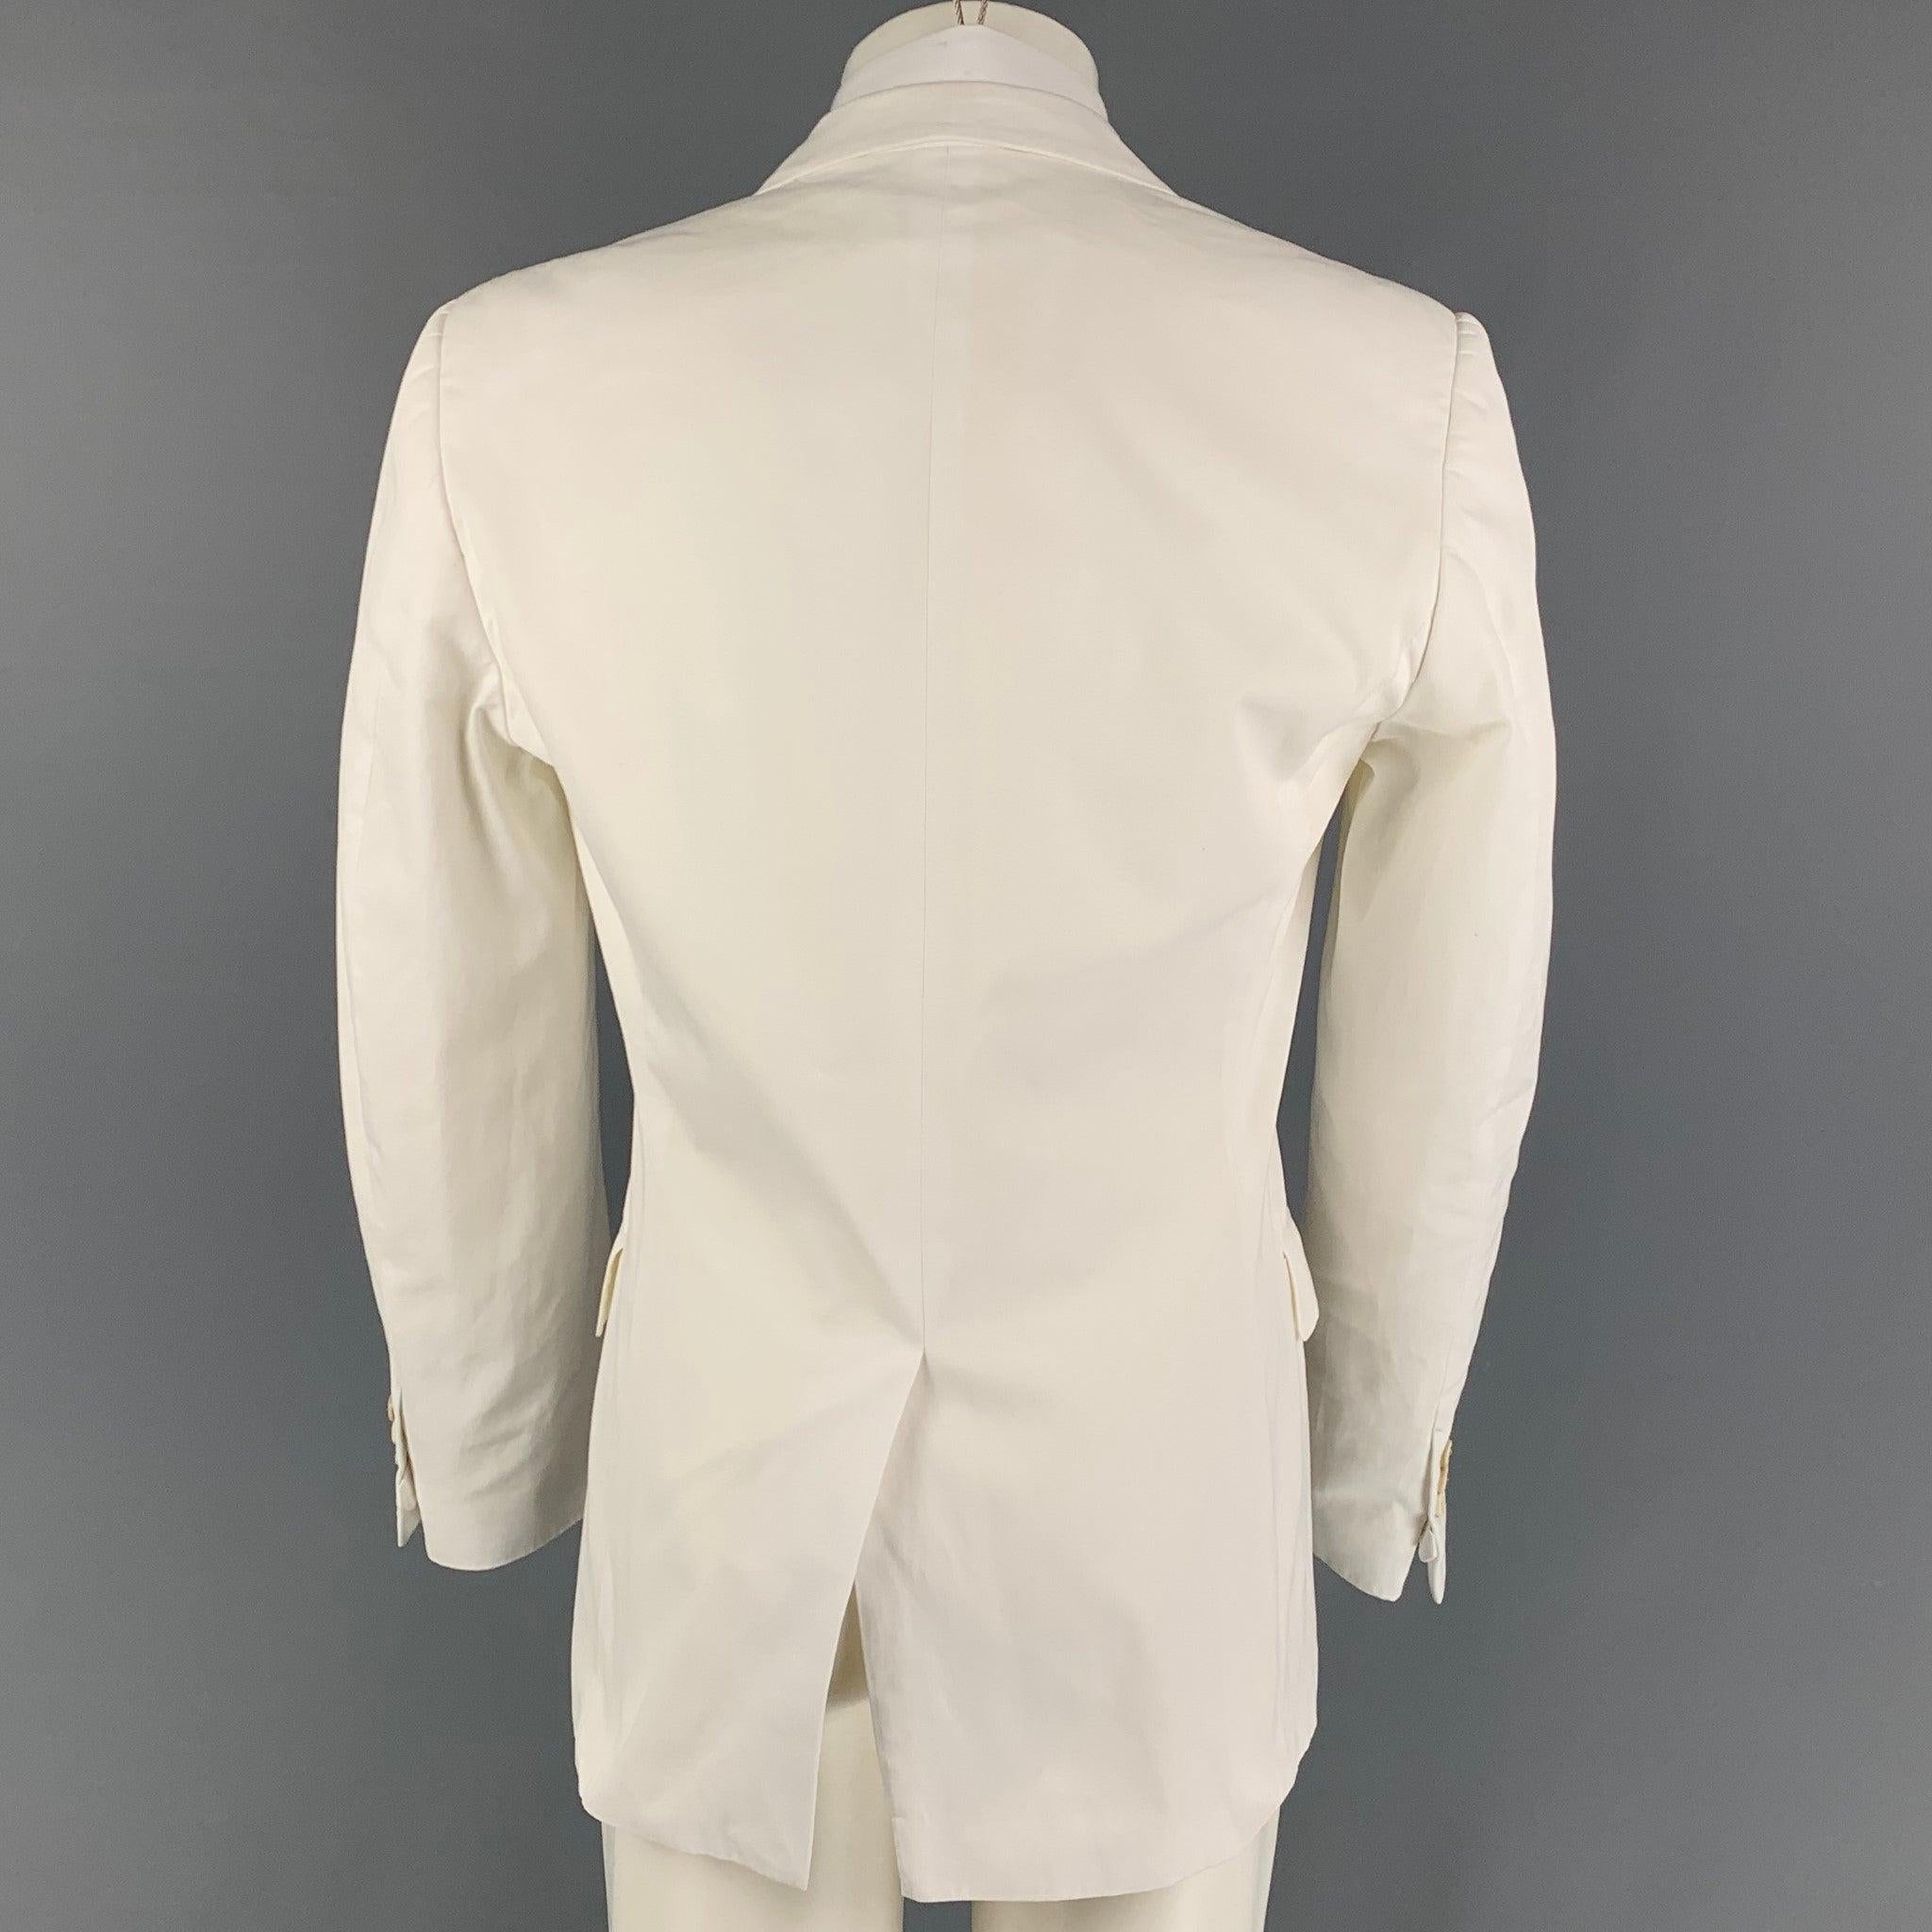 YVES SAINT LAURENT Size 40 White Cotton Peak Lapel Sport Coat In Good Condition For Sale In San Francisco, CA